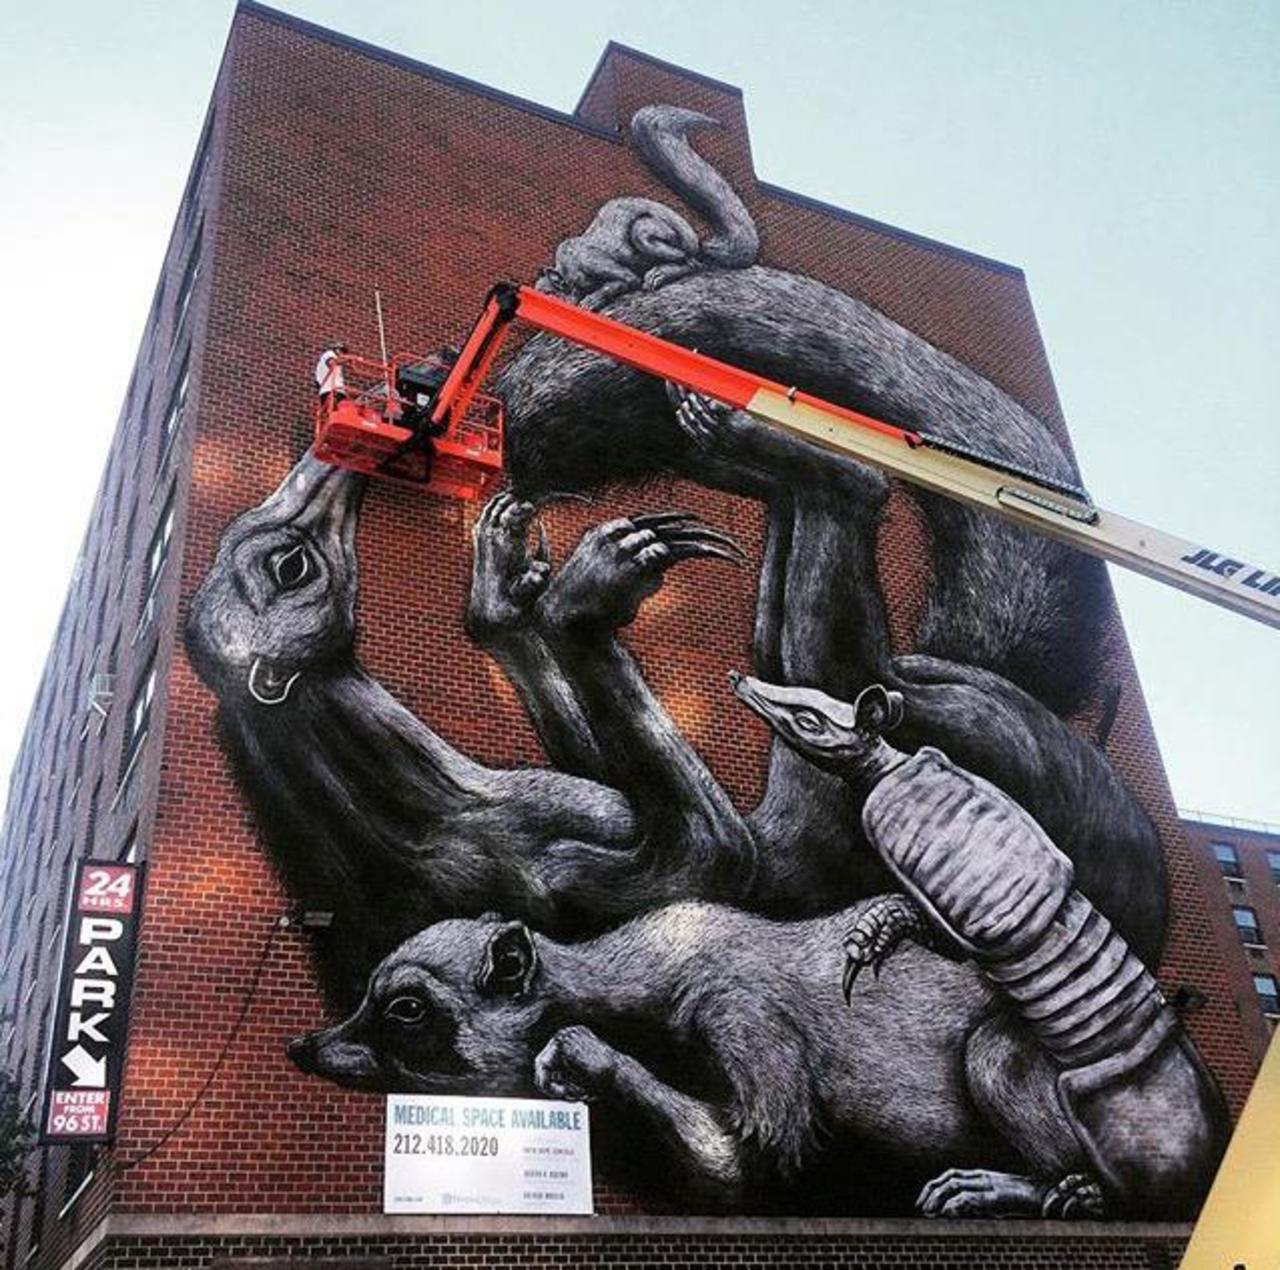 Street Art in progress by ROA in NYC

#art #graffiti #mural #streetart http://t.co/OB33v33R1a